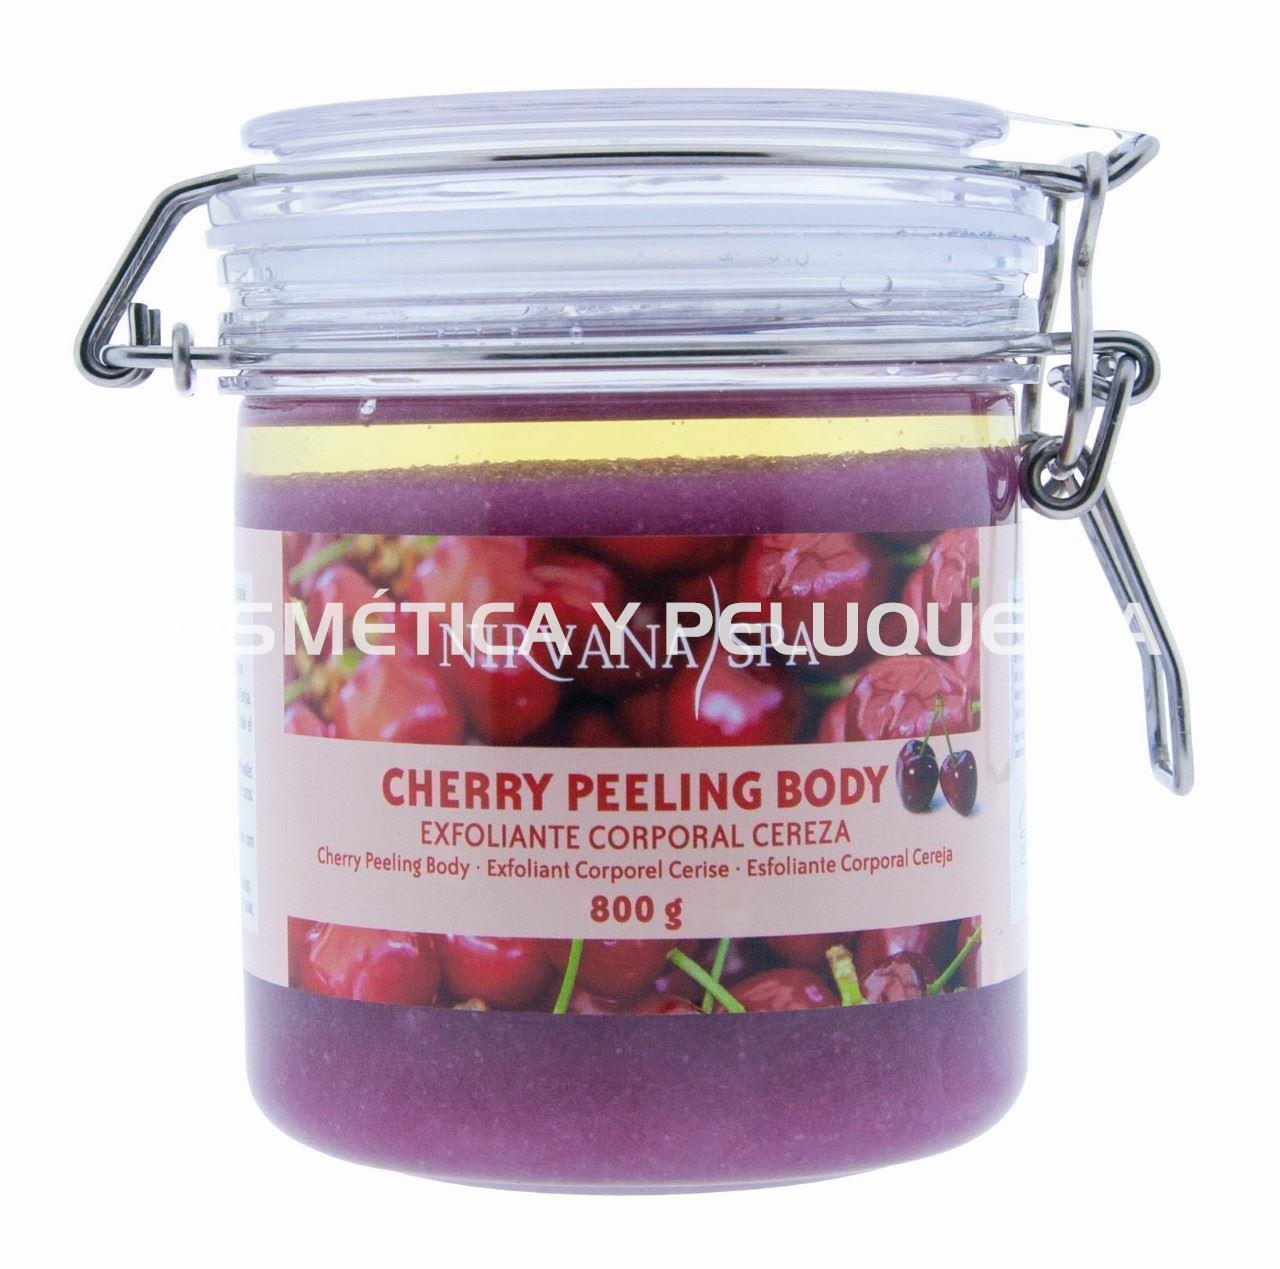 Cherry peeling body, 800grs. - Imagen 1